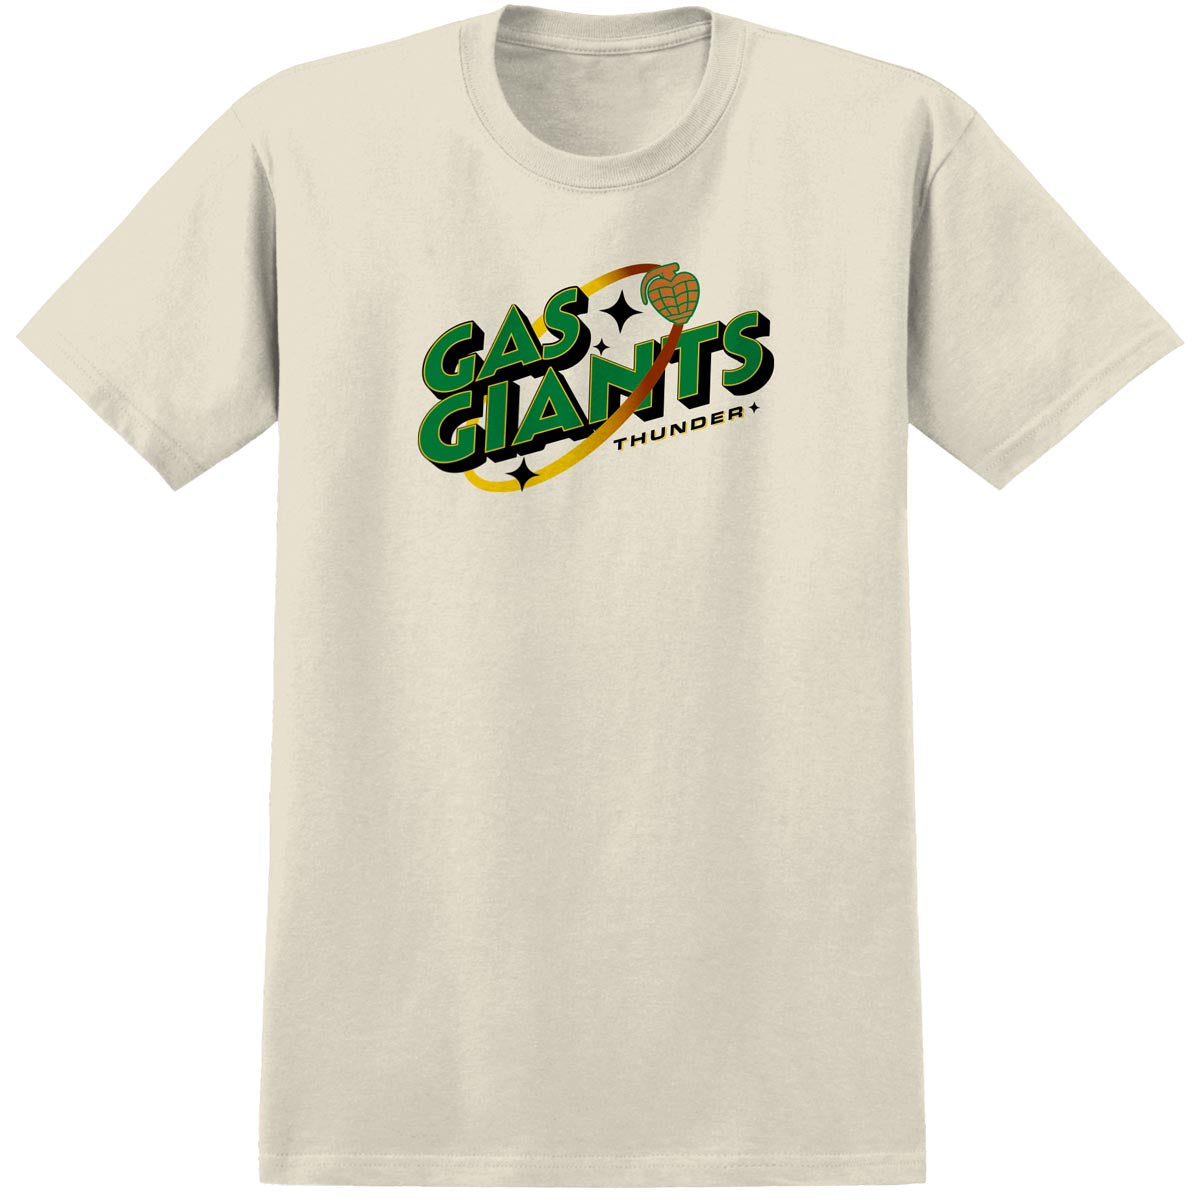 Thunder x Gas Giants T-Shirt - Natural